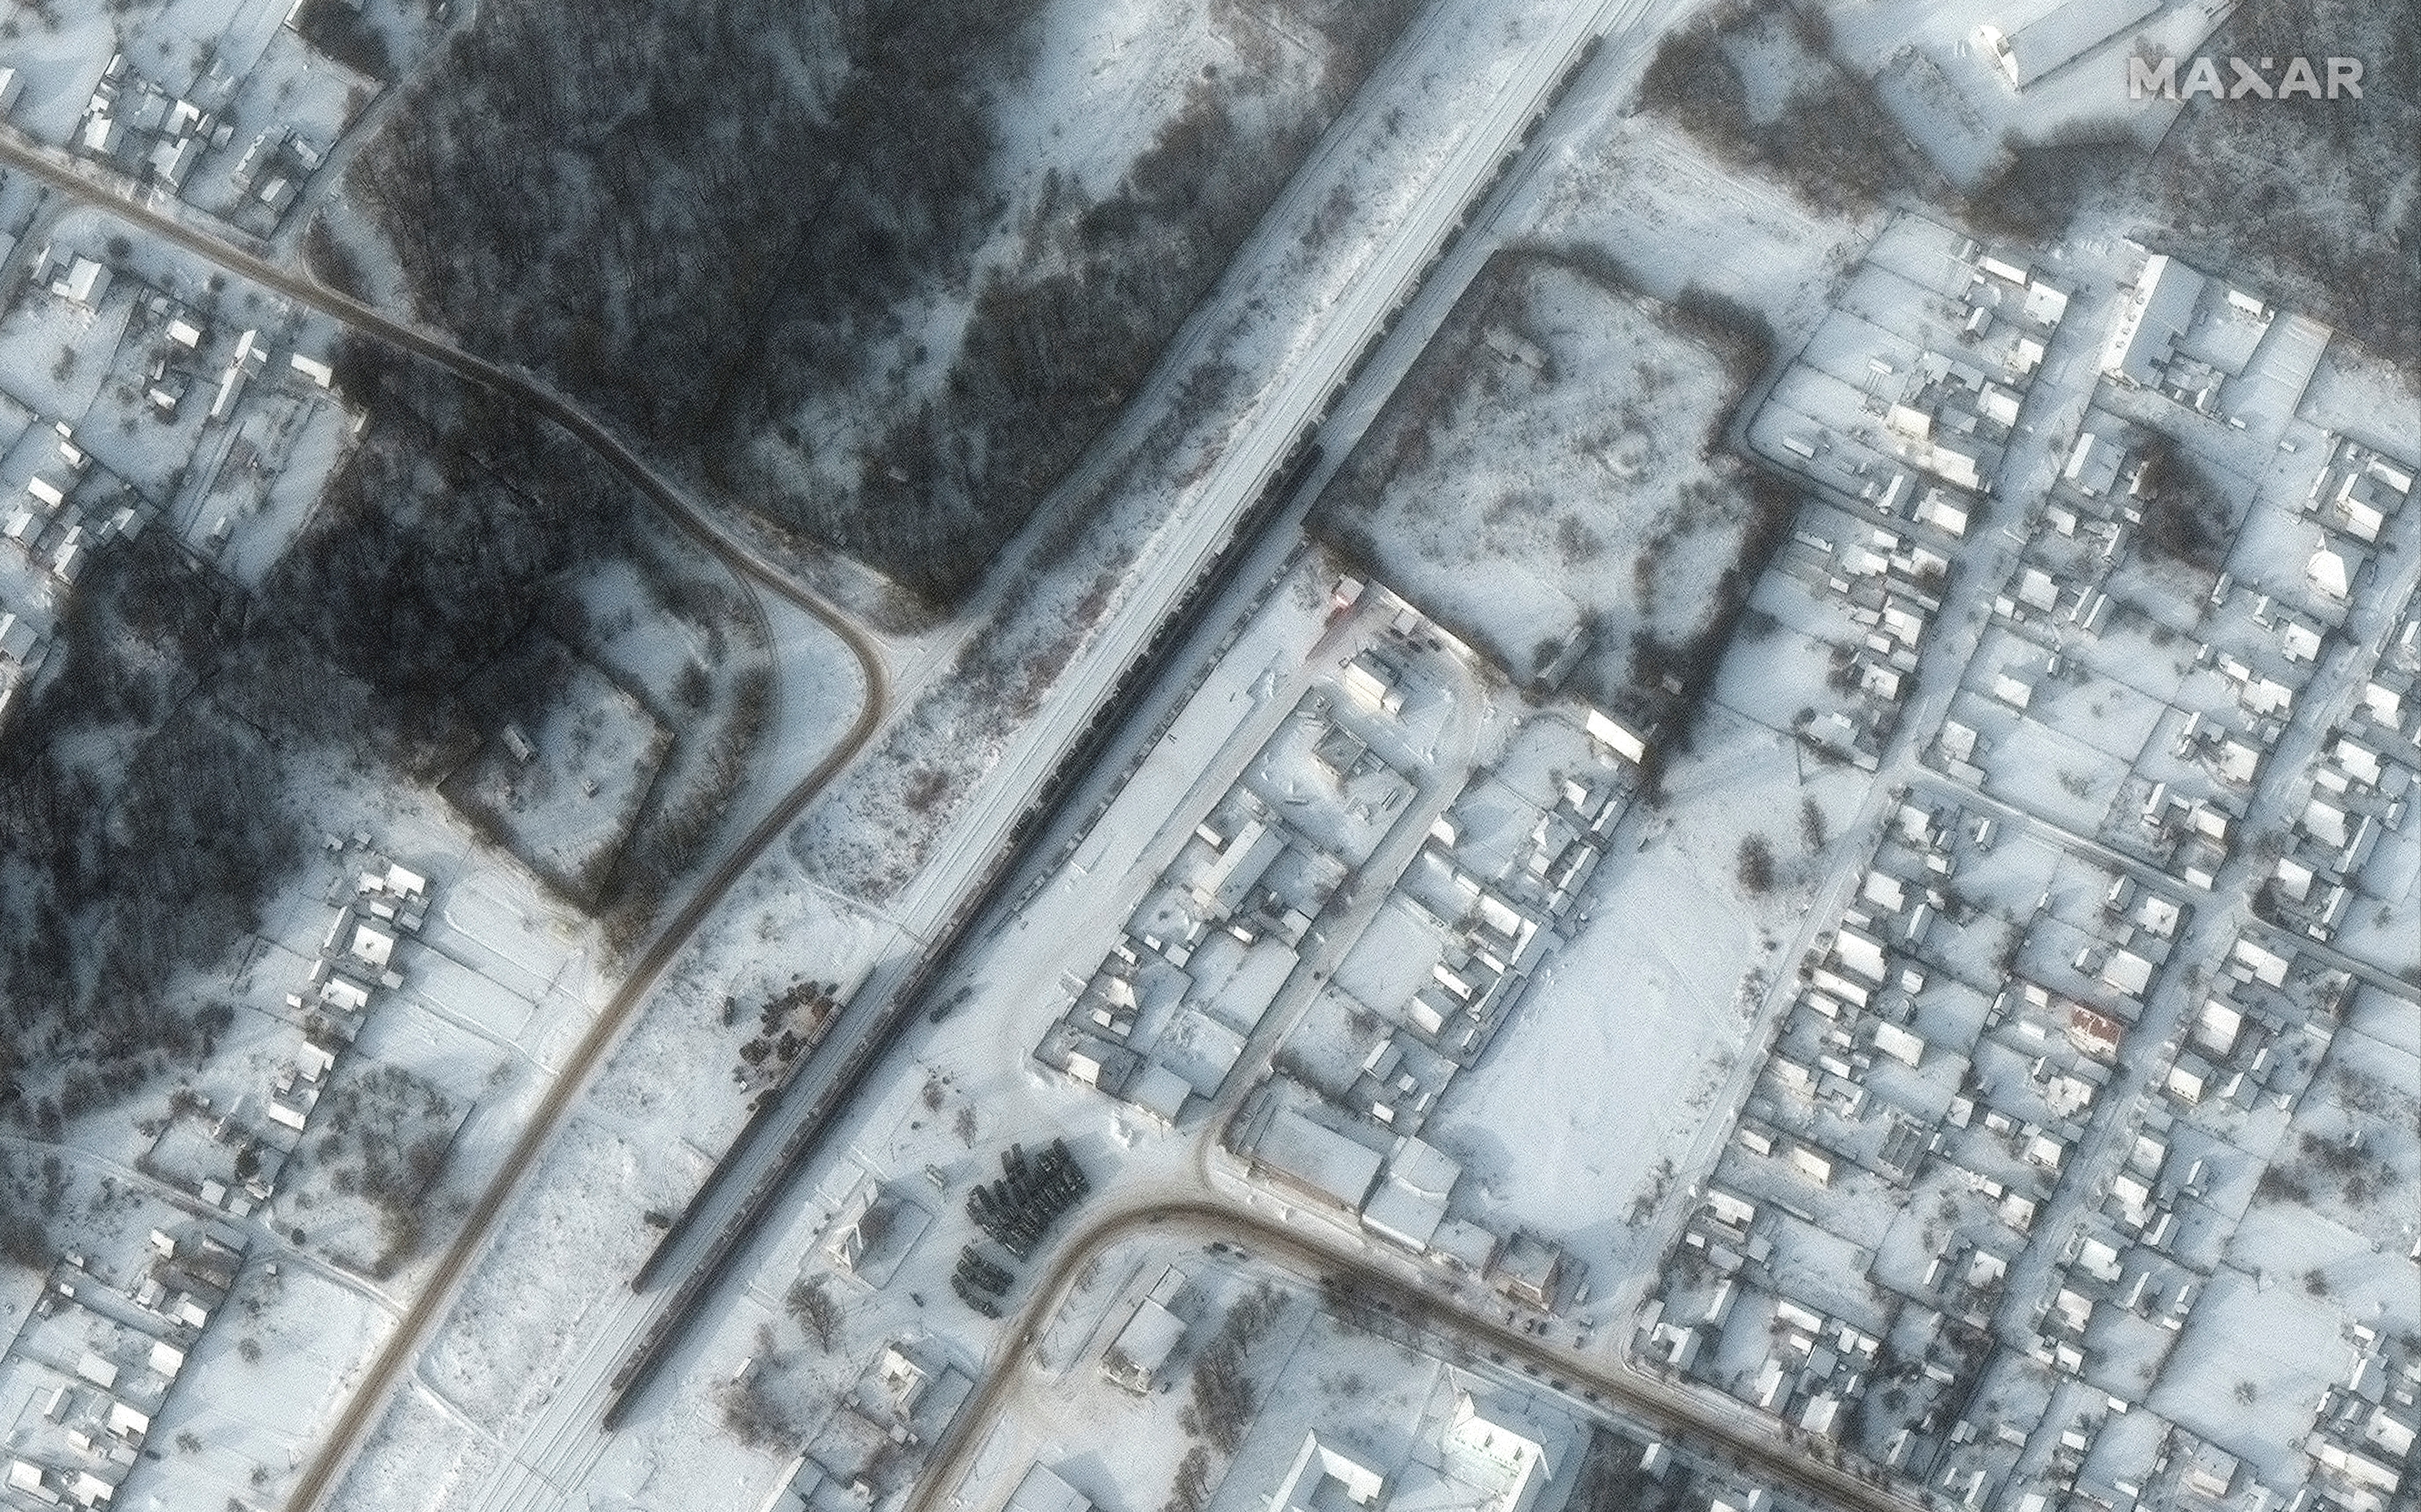 A satellite image shows equipment deployed at Klimovo Railyard in Klimovo